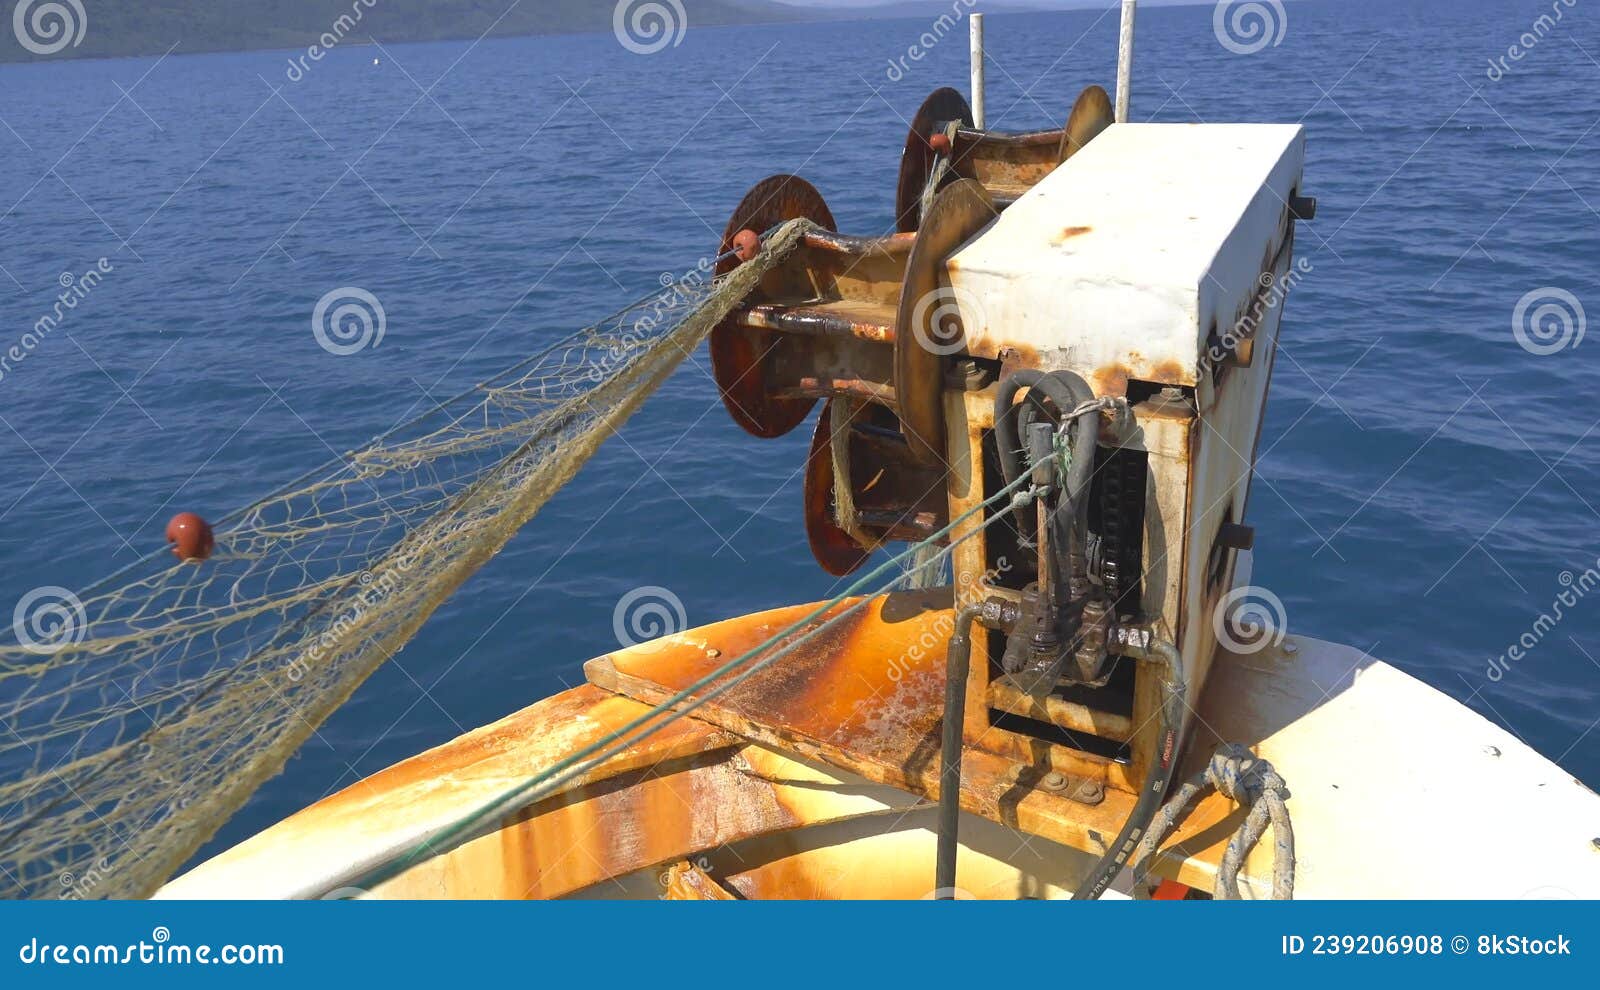 https://thumbs.dreamstime.com/z/net-reel-small-fishing-boat-pulling-net-nylon-fishing-net-float-line-attached-to-small-plastic-floats-fishing-net-reel-239206908.jpg